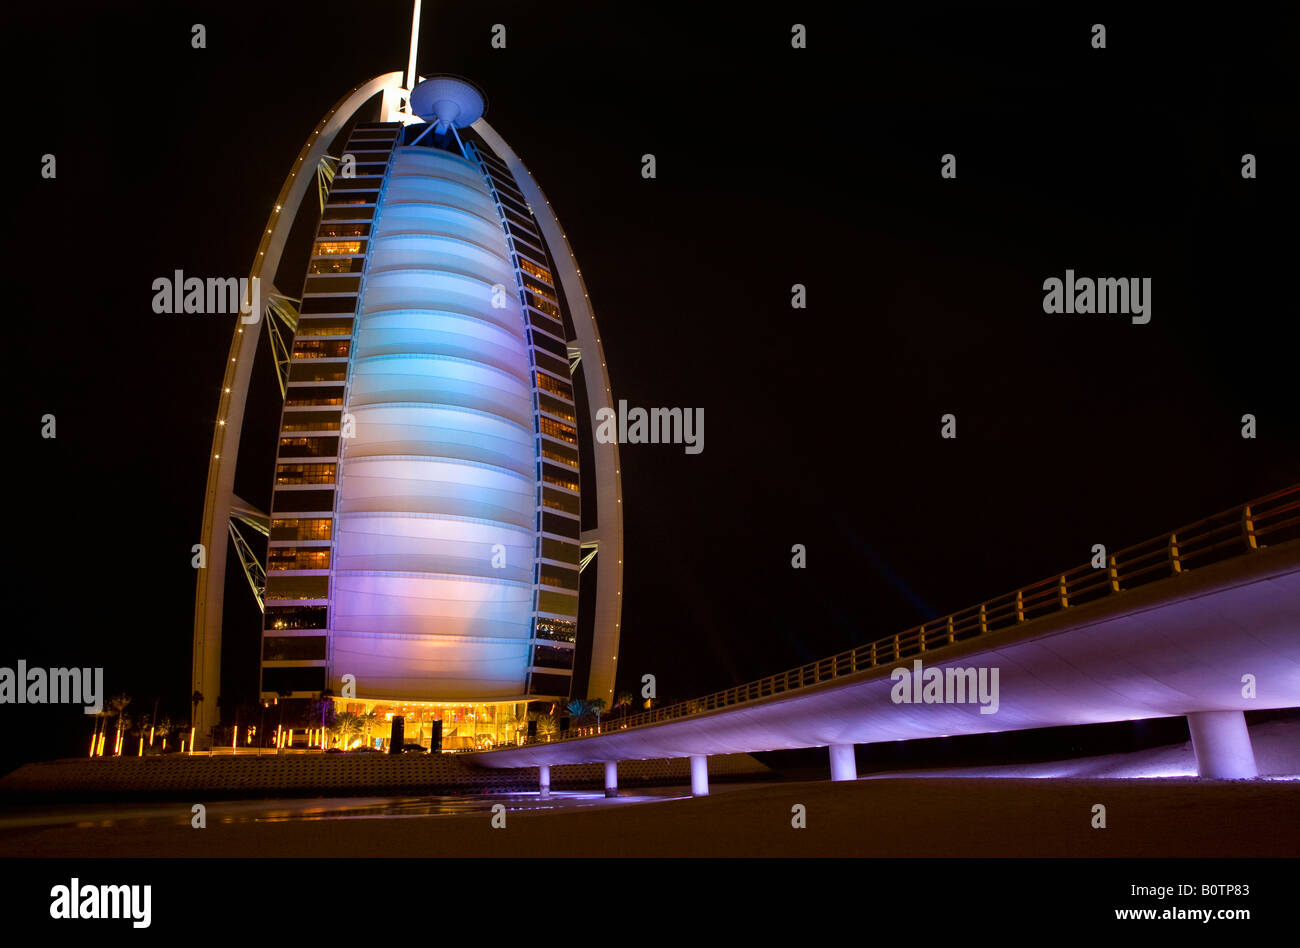 The Burj Al Arab hotel in Jumeirah, Dubai, United Arab Emirates. Stock Photo